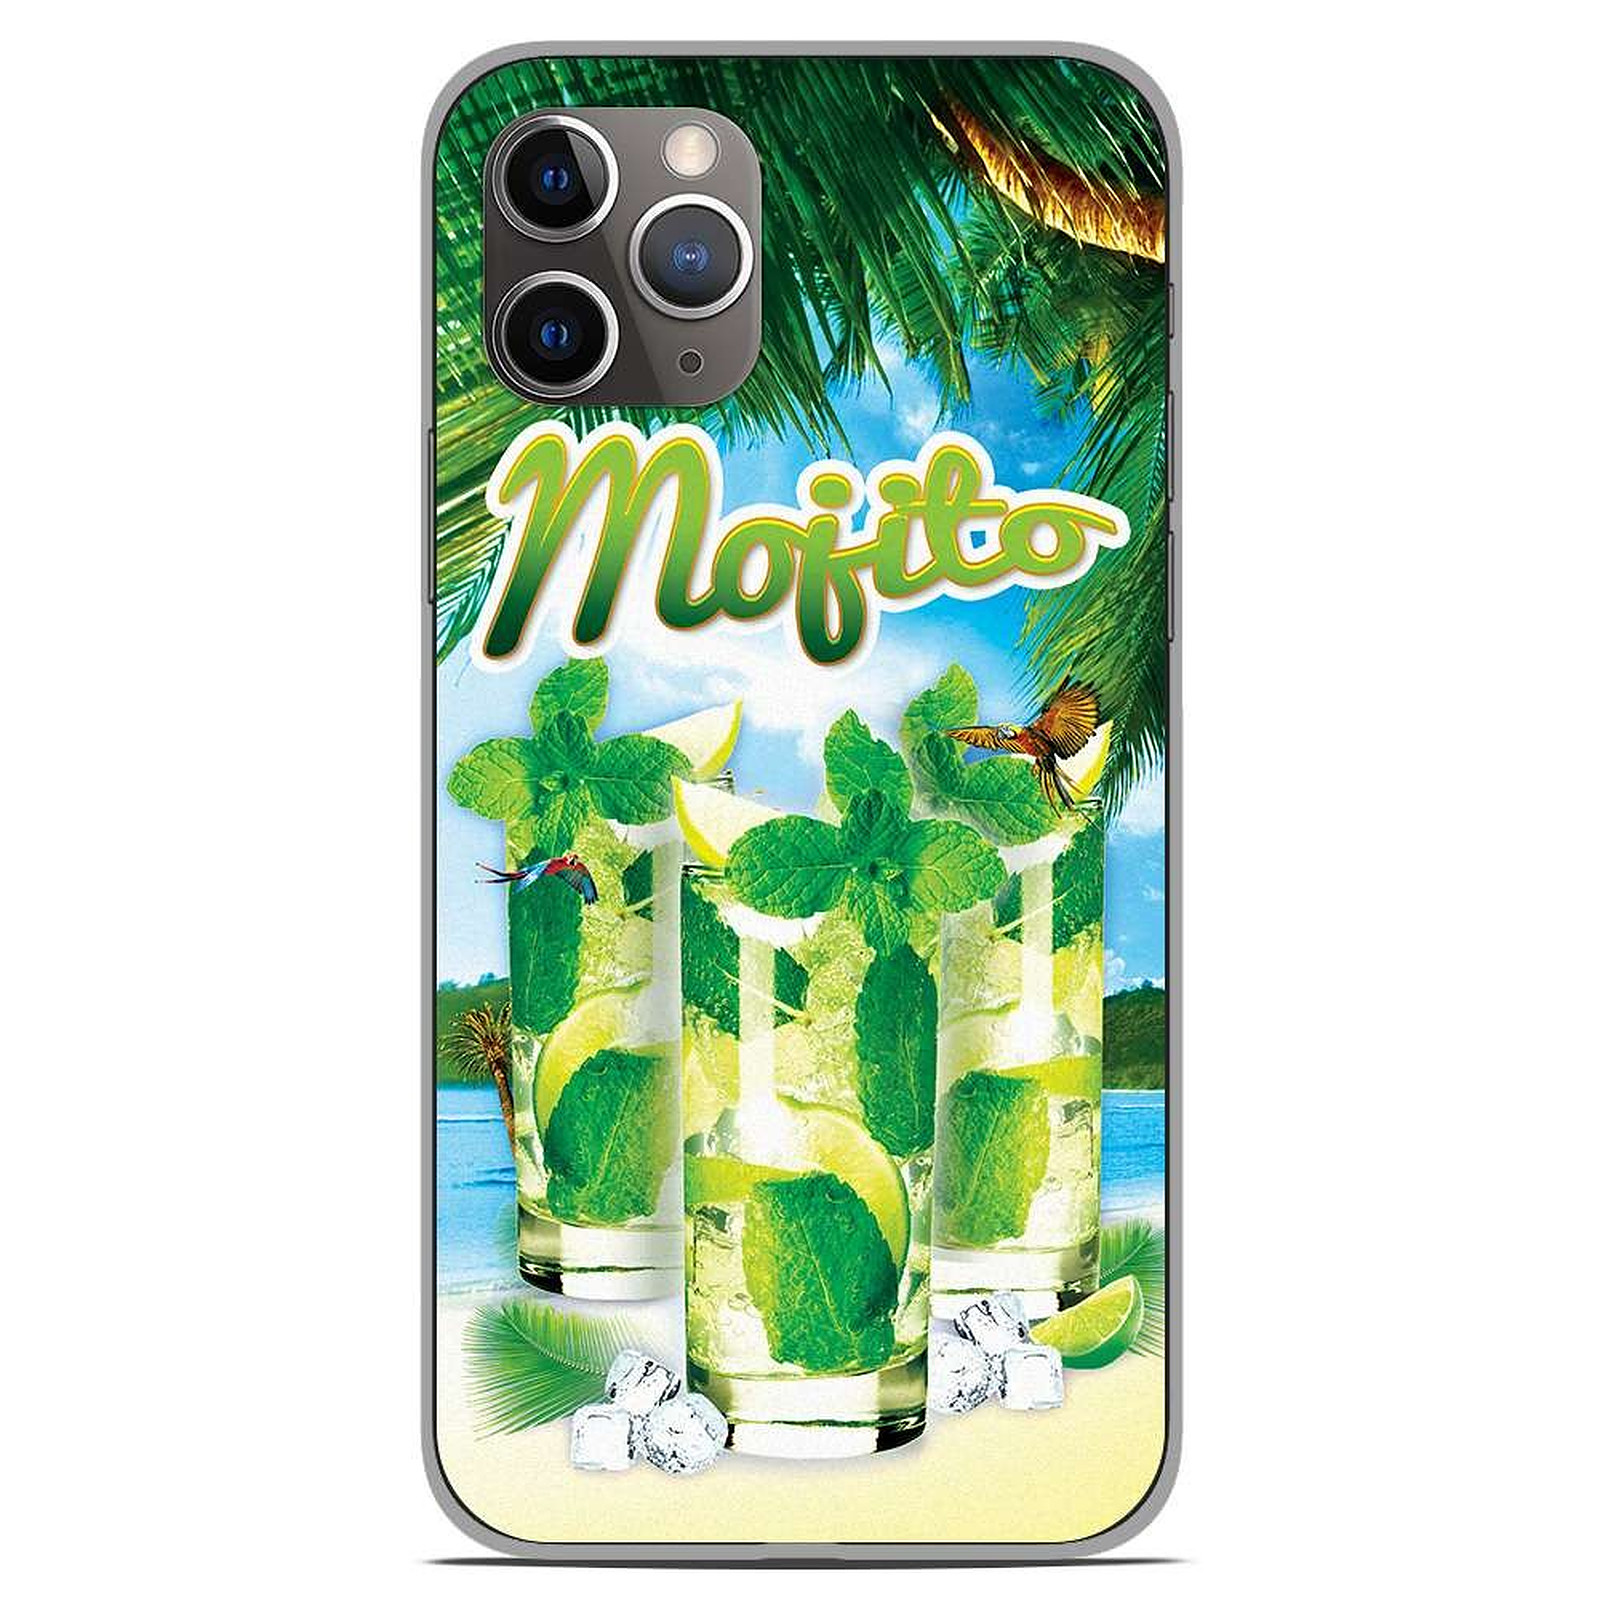 1001 Coques Coque silicone gel Apple iPhone 11 Pro motif Mojito Plage - Coque telephone 1001Coques